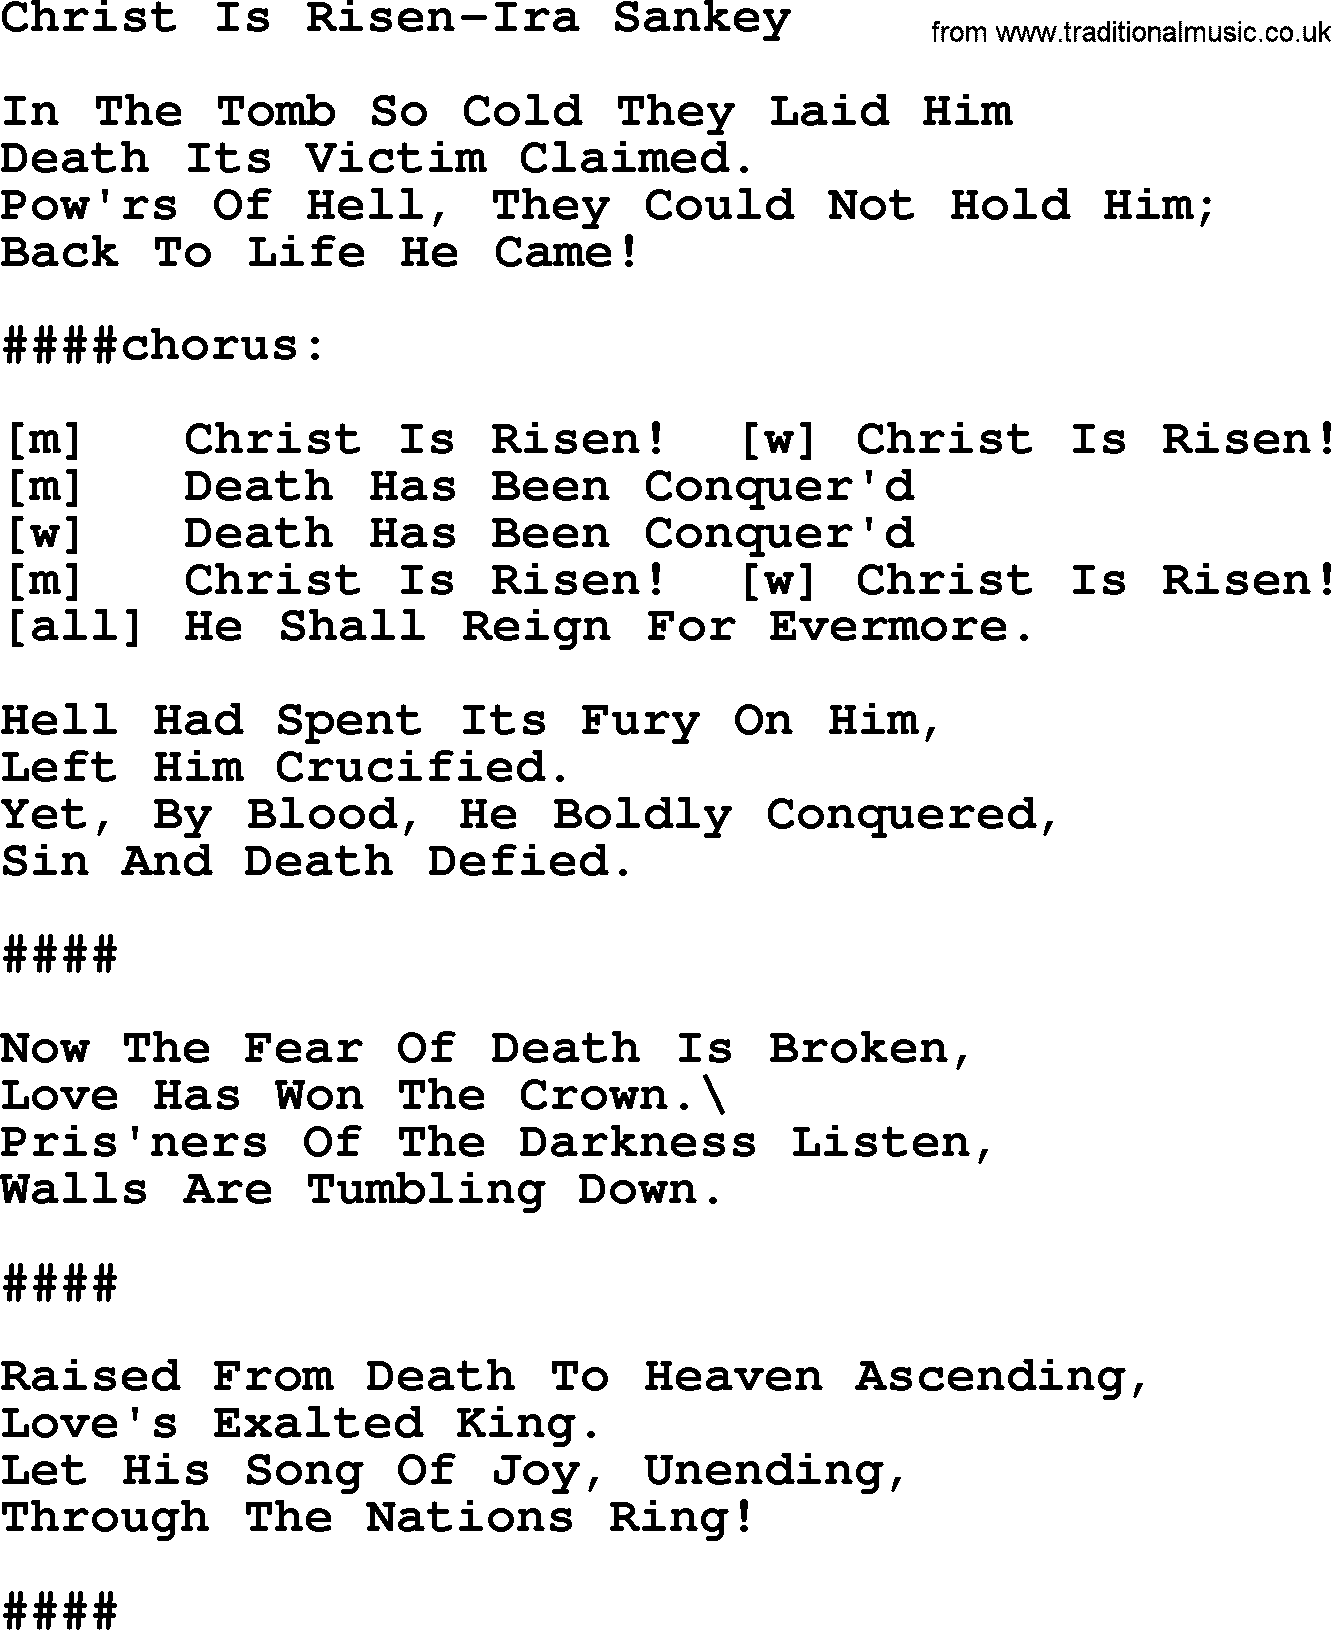 Ira Sankey hymn: Christ Is Risen-Ira Sankey, lyrics